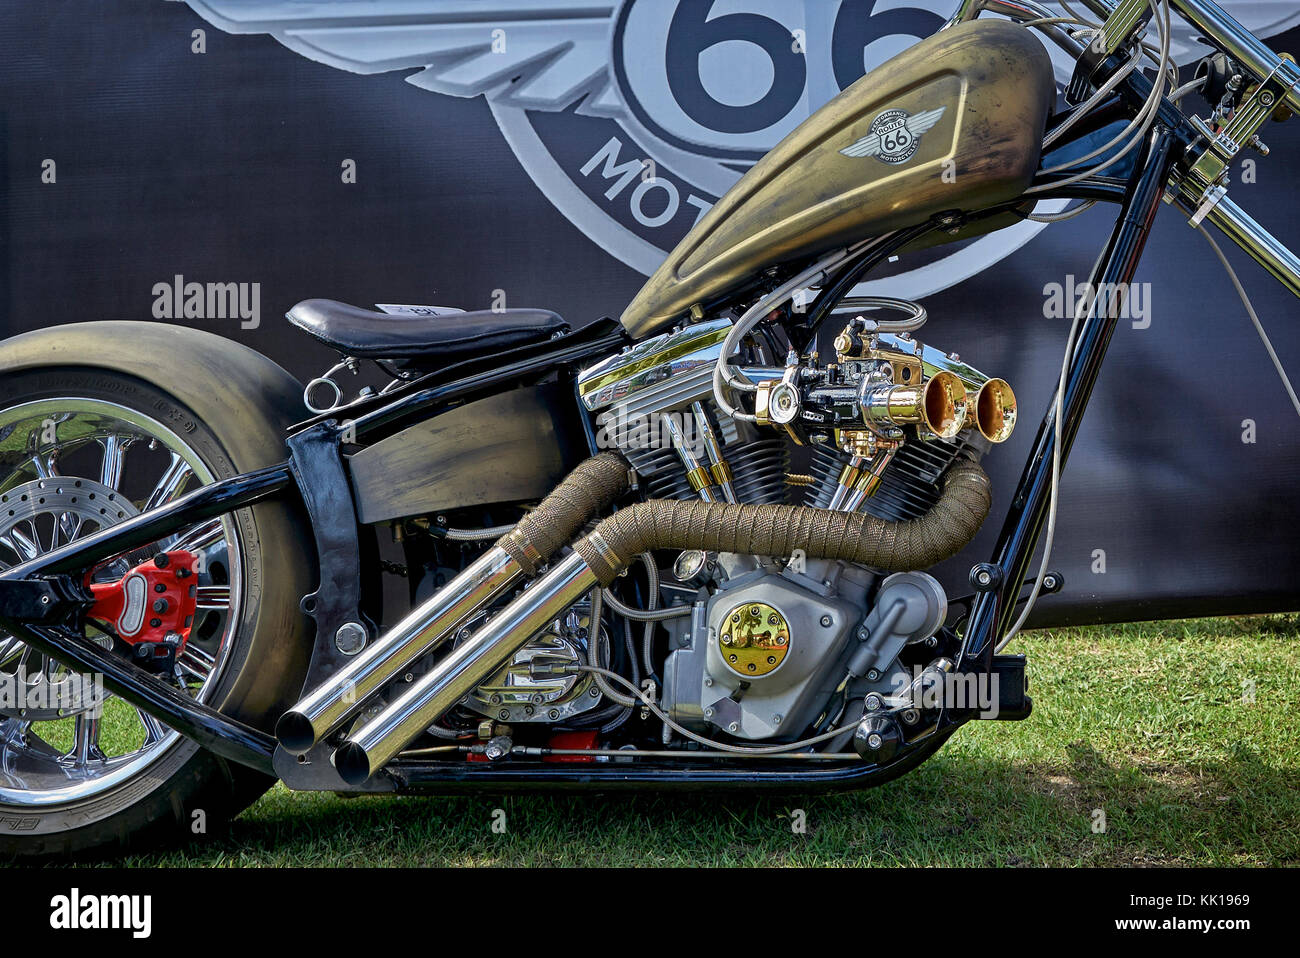 Harley Davidson custom chopper motorbike. Stock Photo